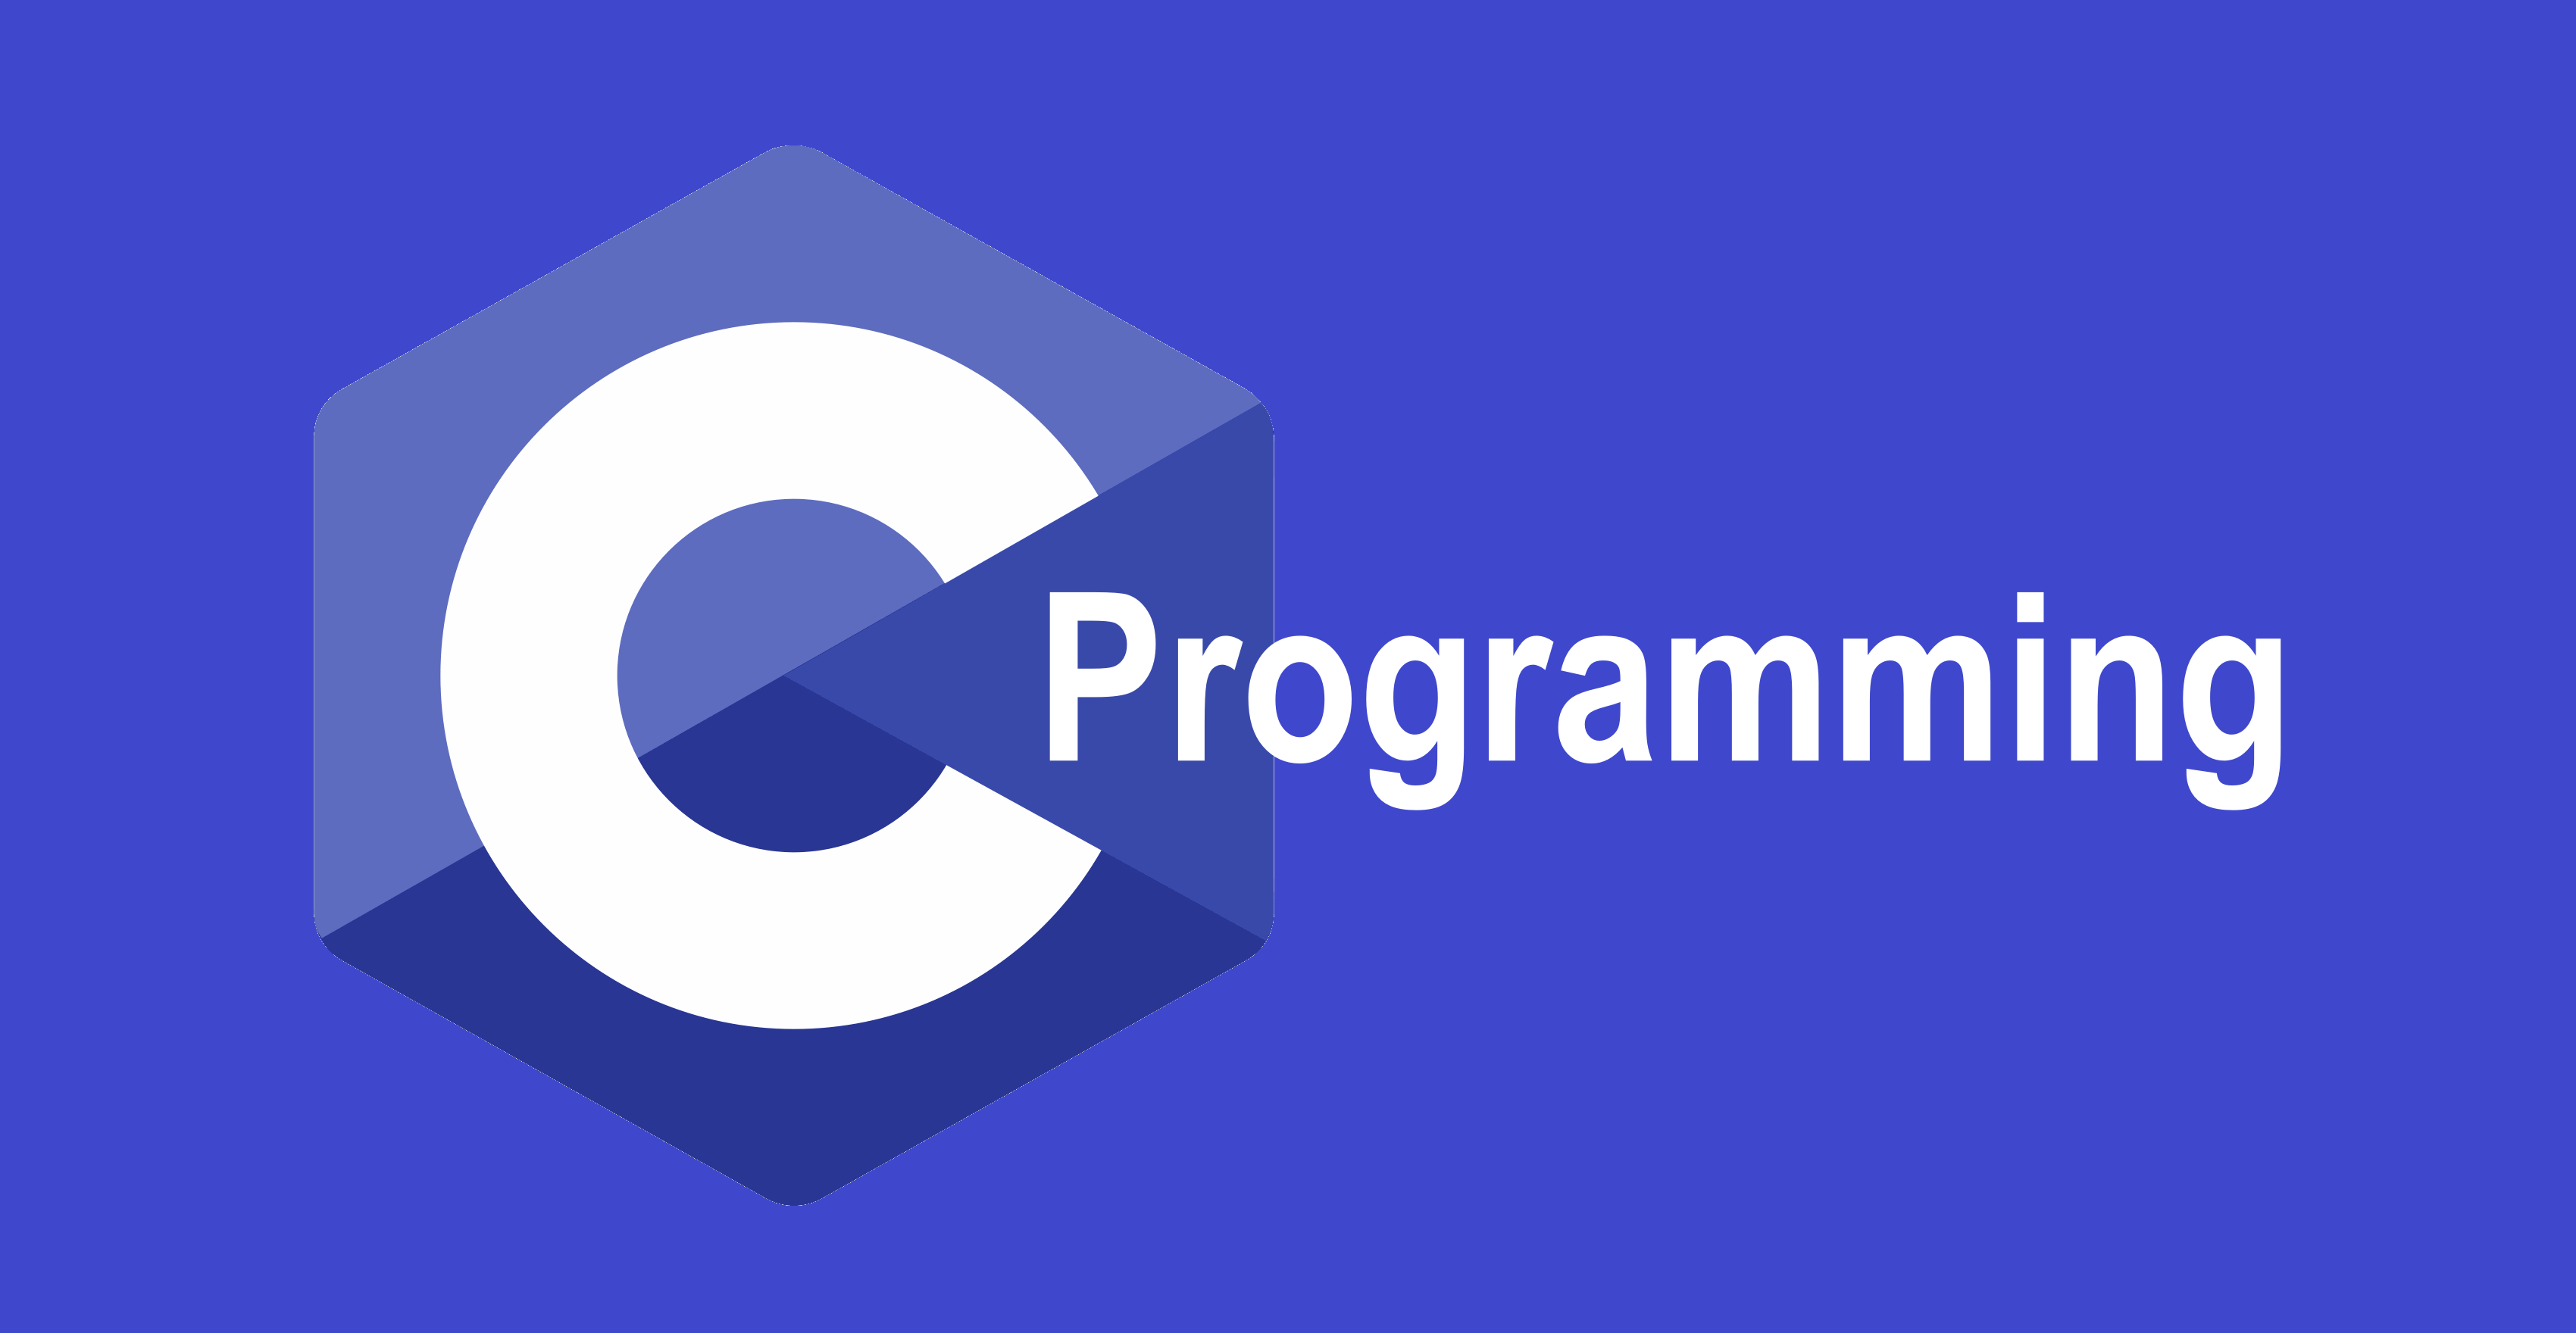 Problem Solving & Programming Using C